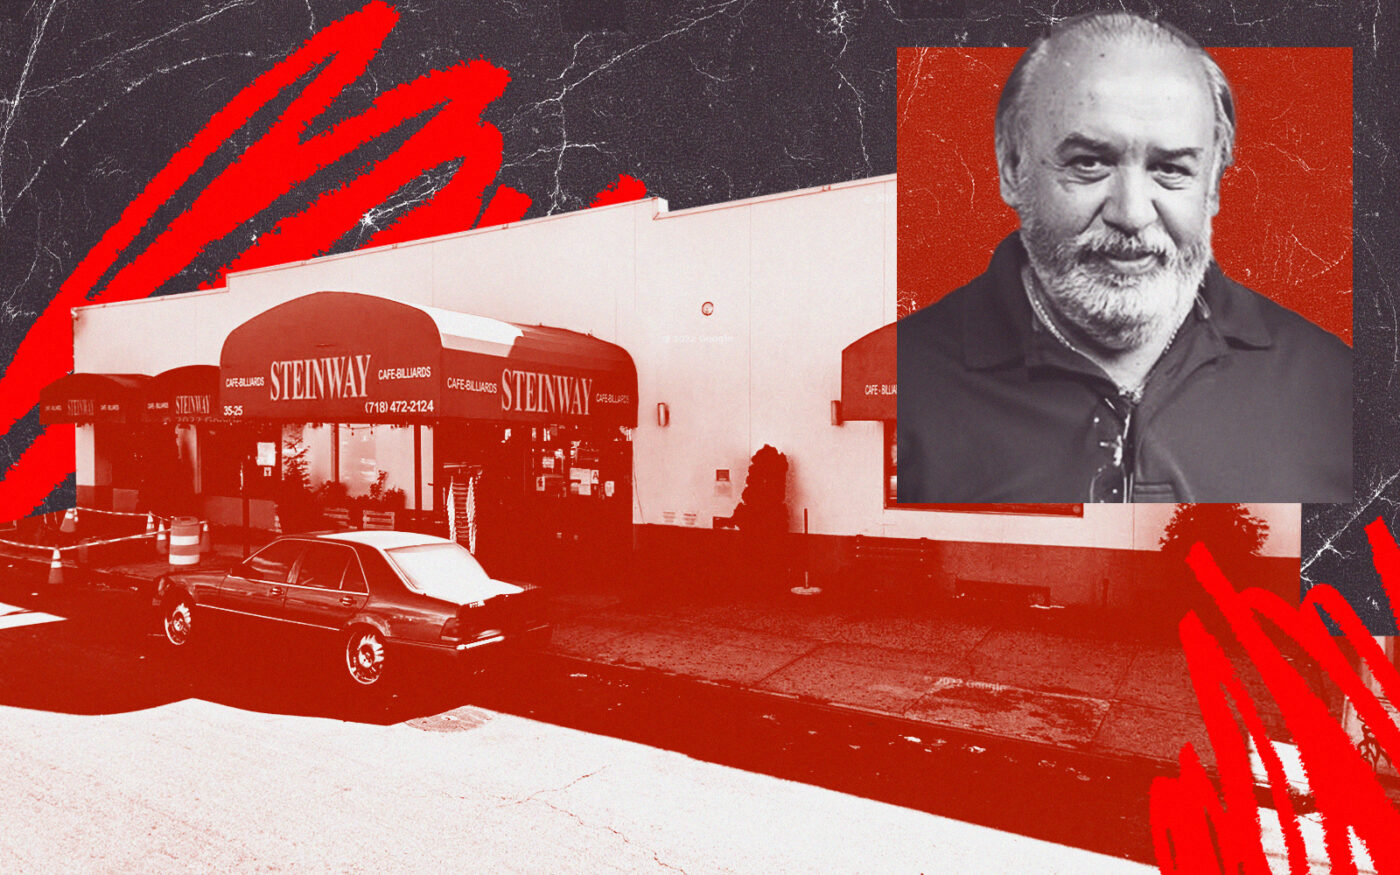 Steinway Cafe-Billiards owner Georgiois Nikolakakos with 3525 Steinway Street